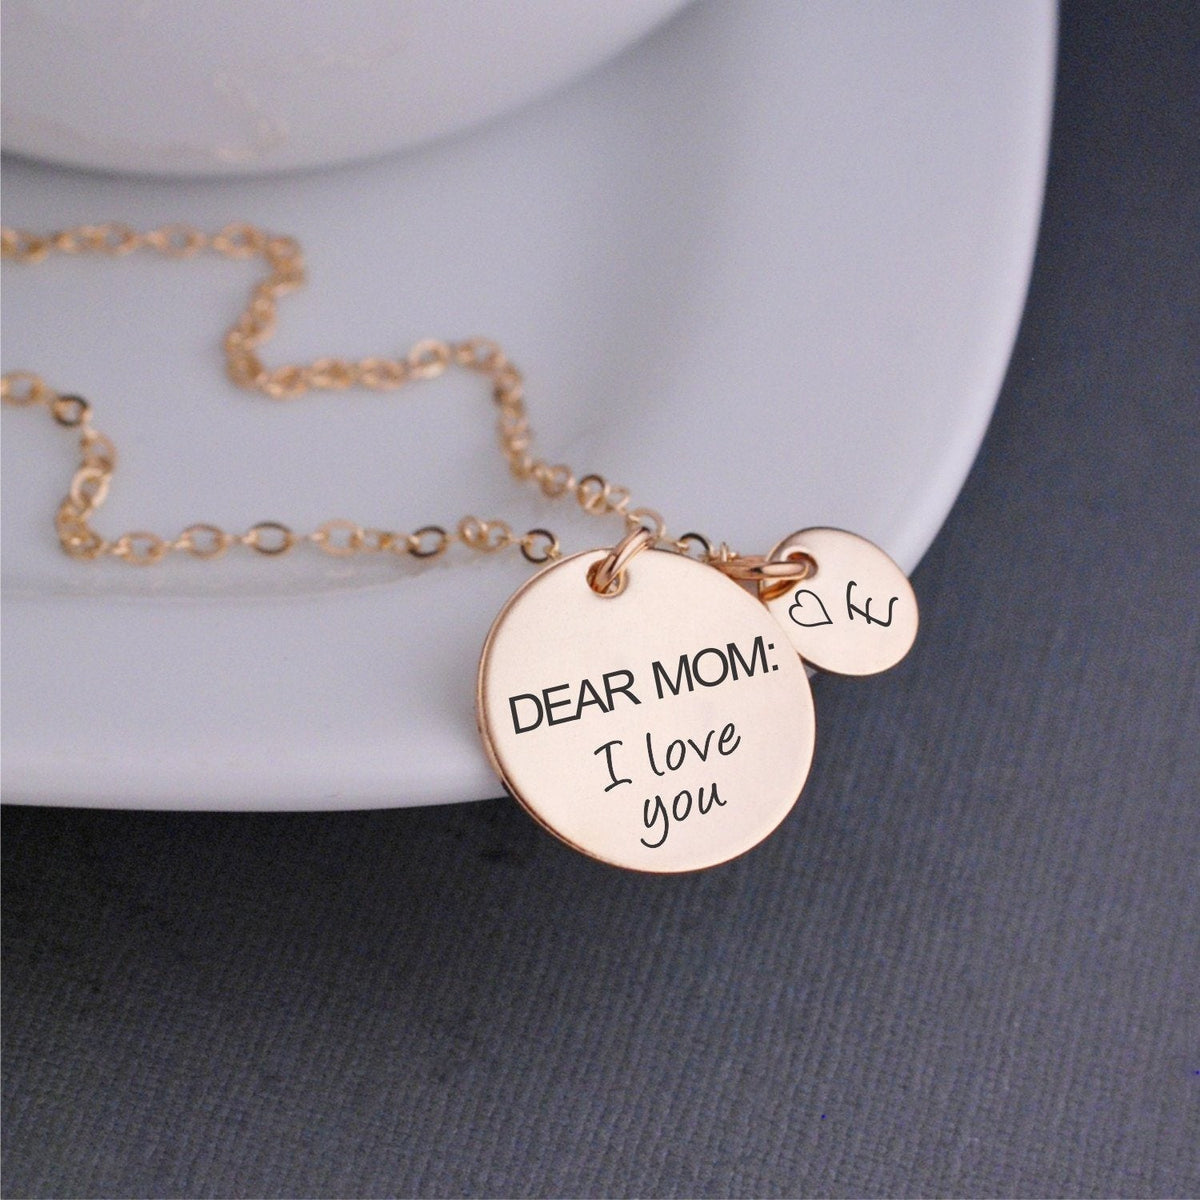 Dear Mom: I Love You Necklace – Necklace – georgiedesigns